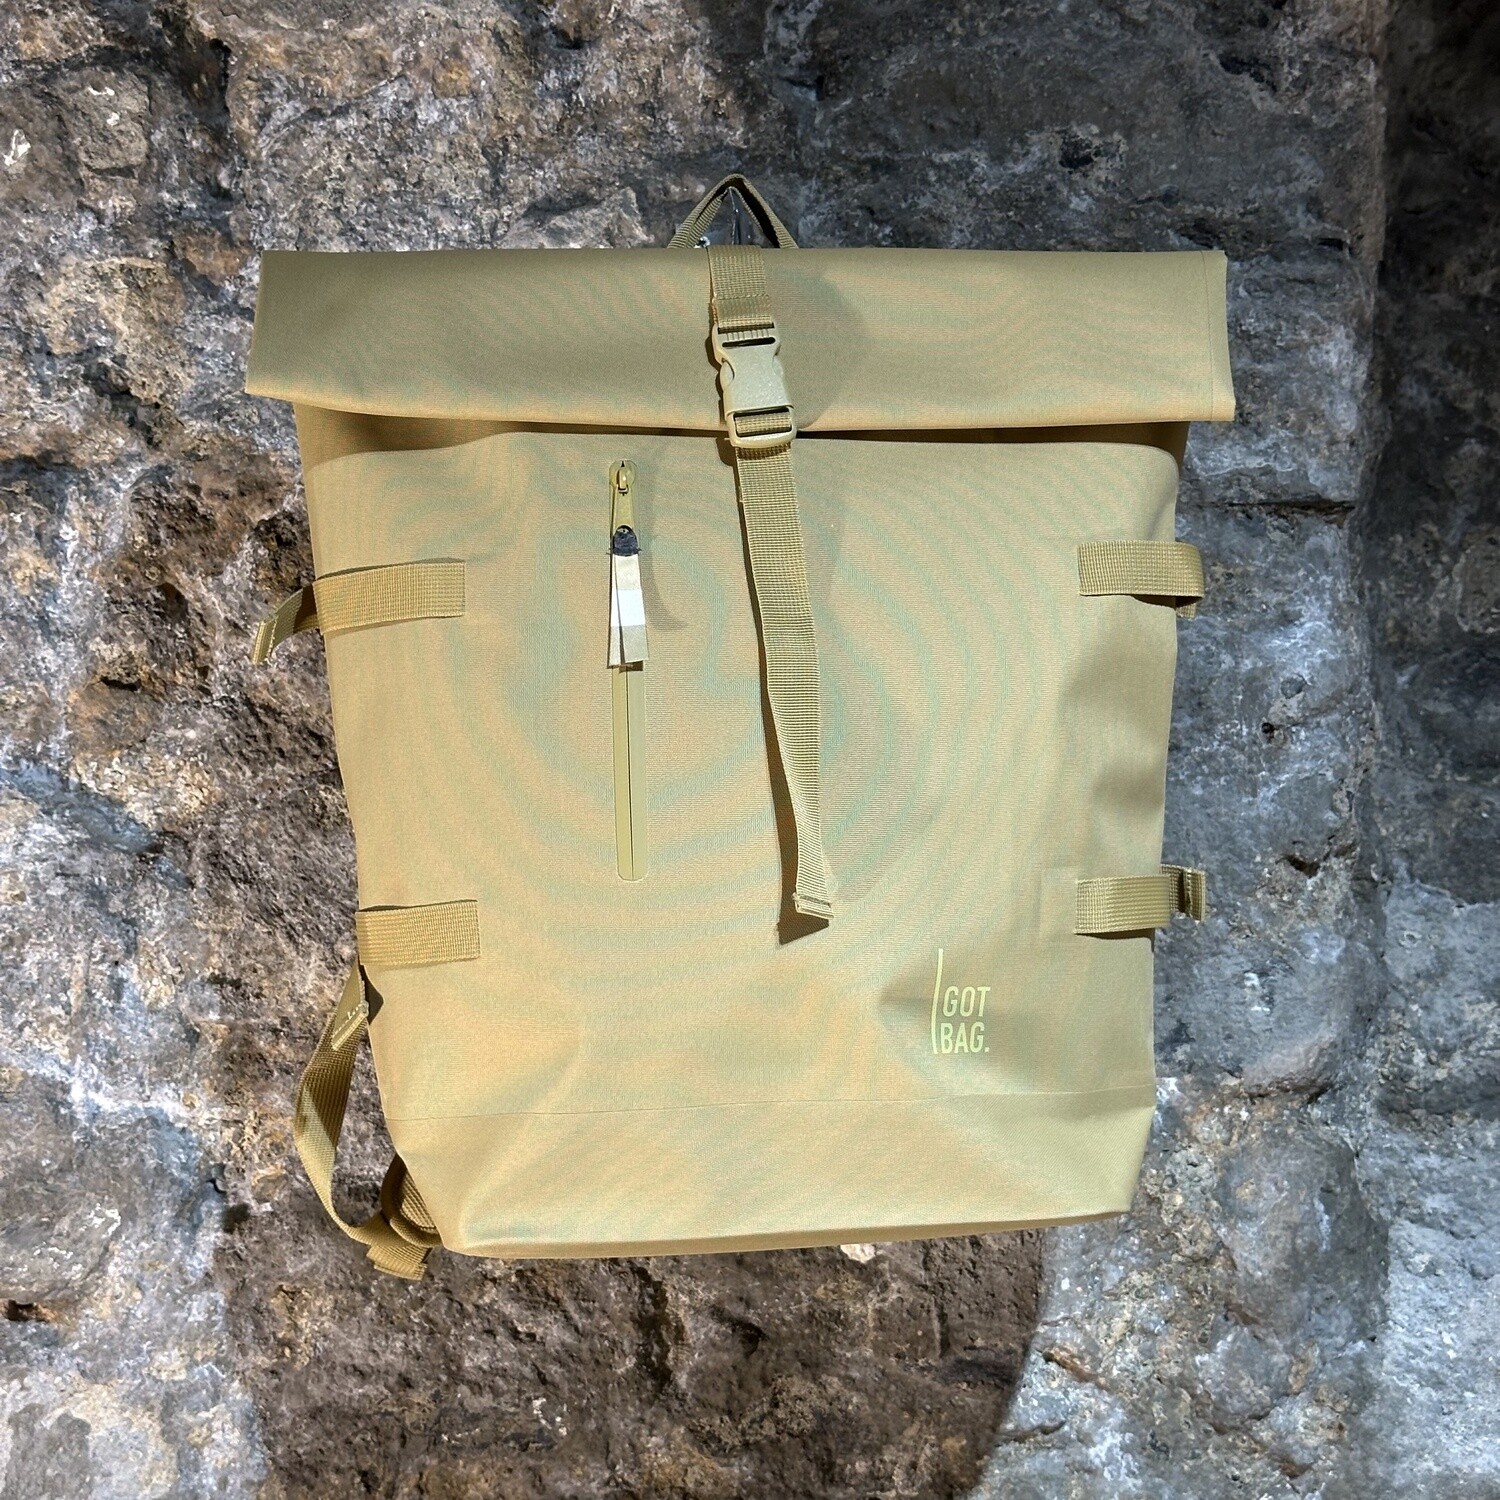 Got Bag — Rolltop seadragon monochrome